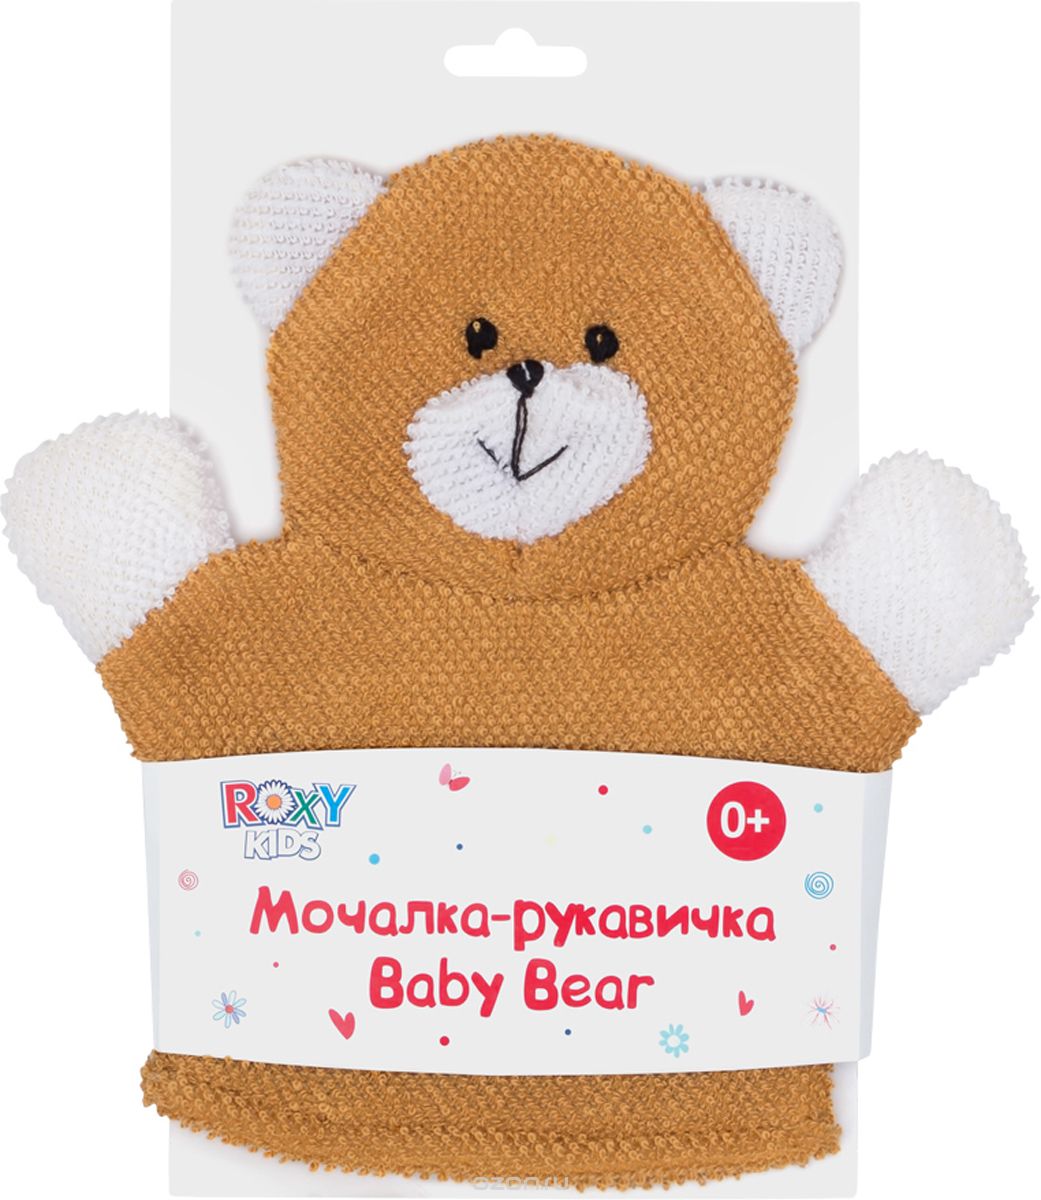 Roxy-kids - Baby Bear